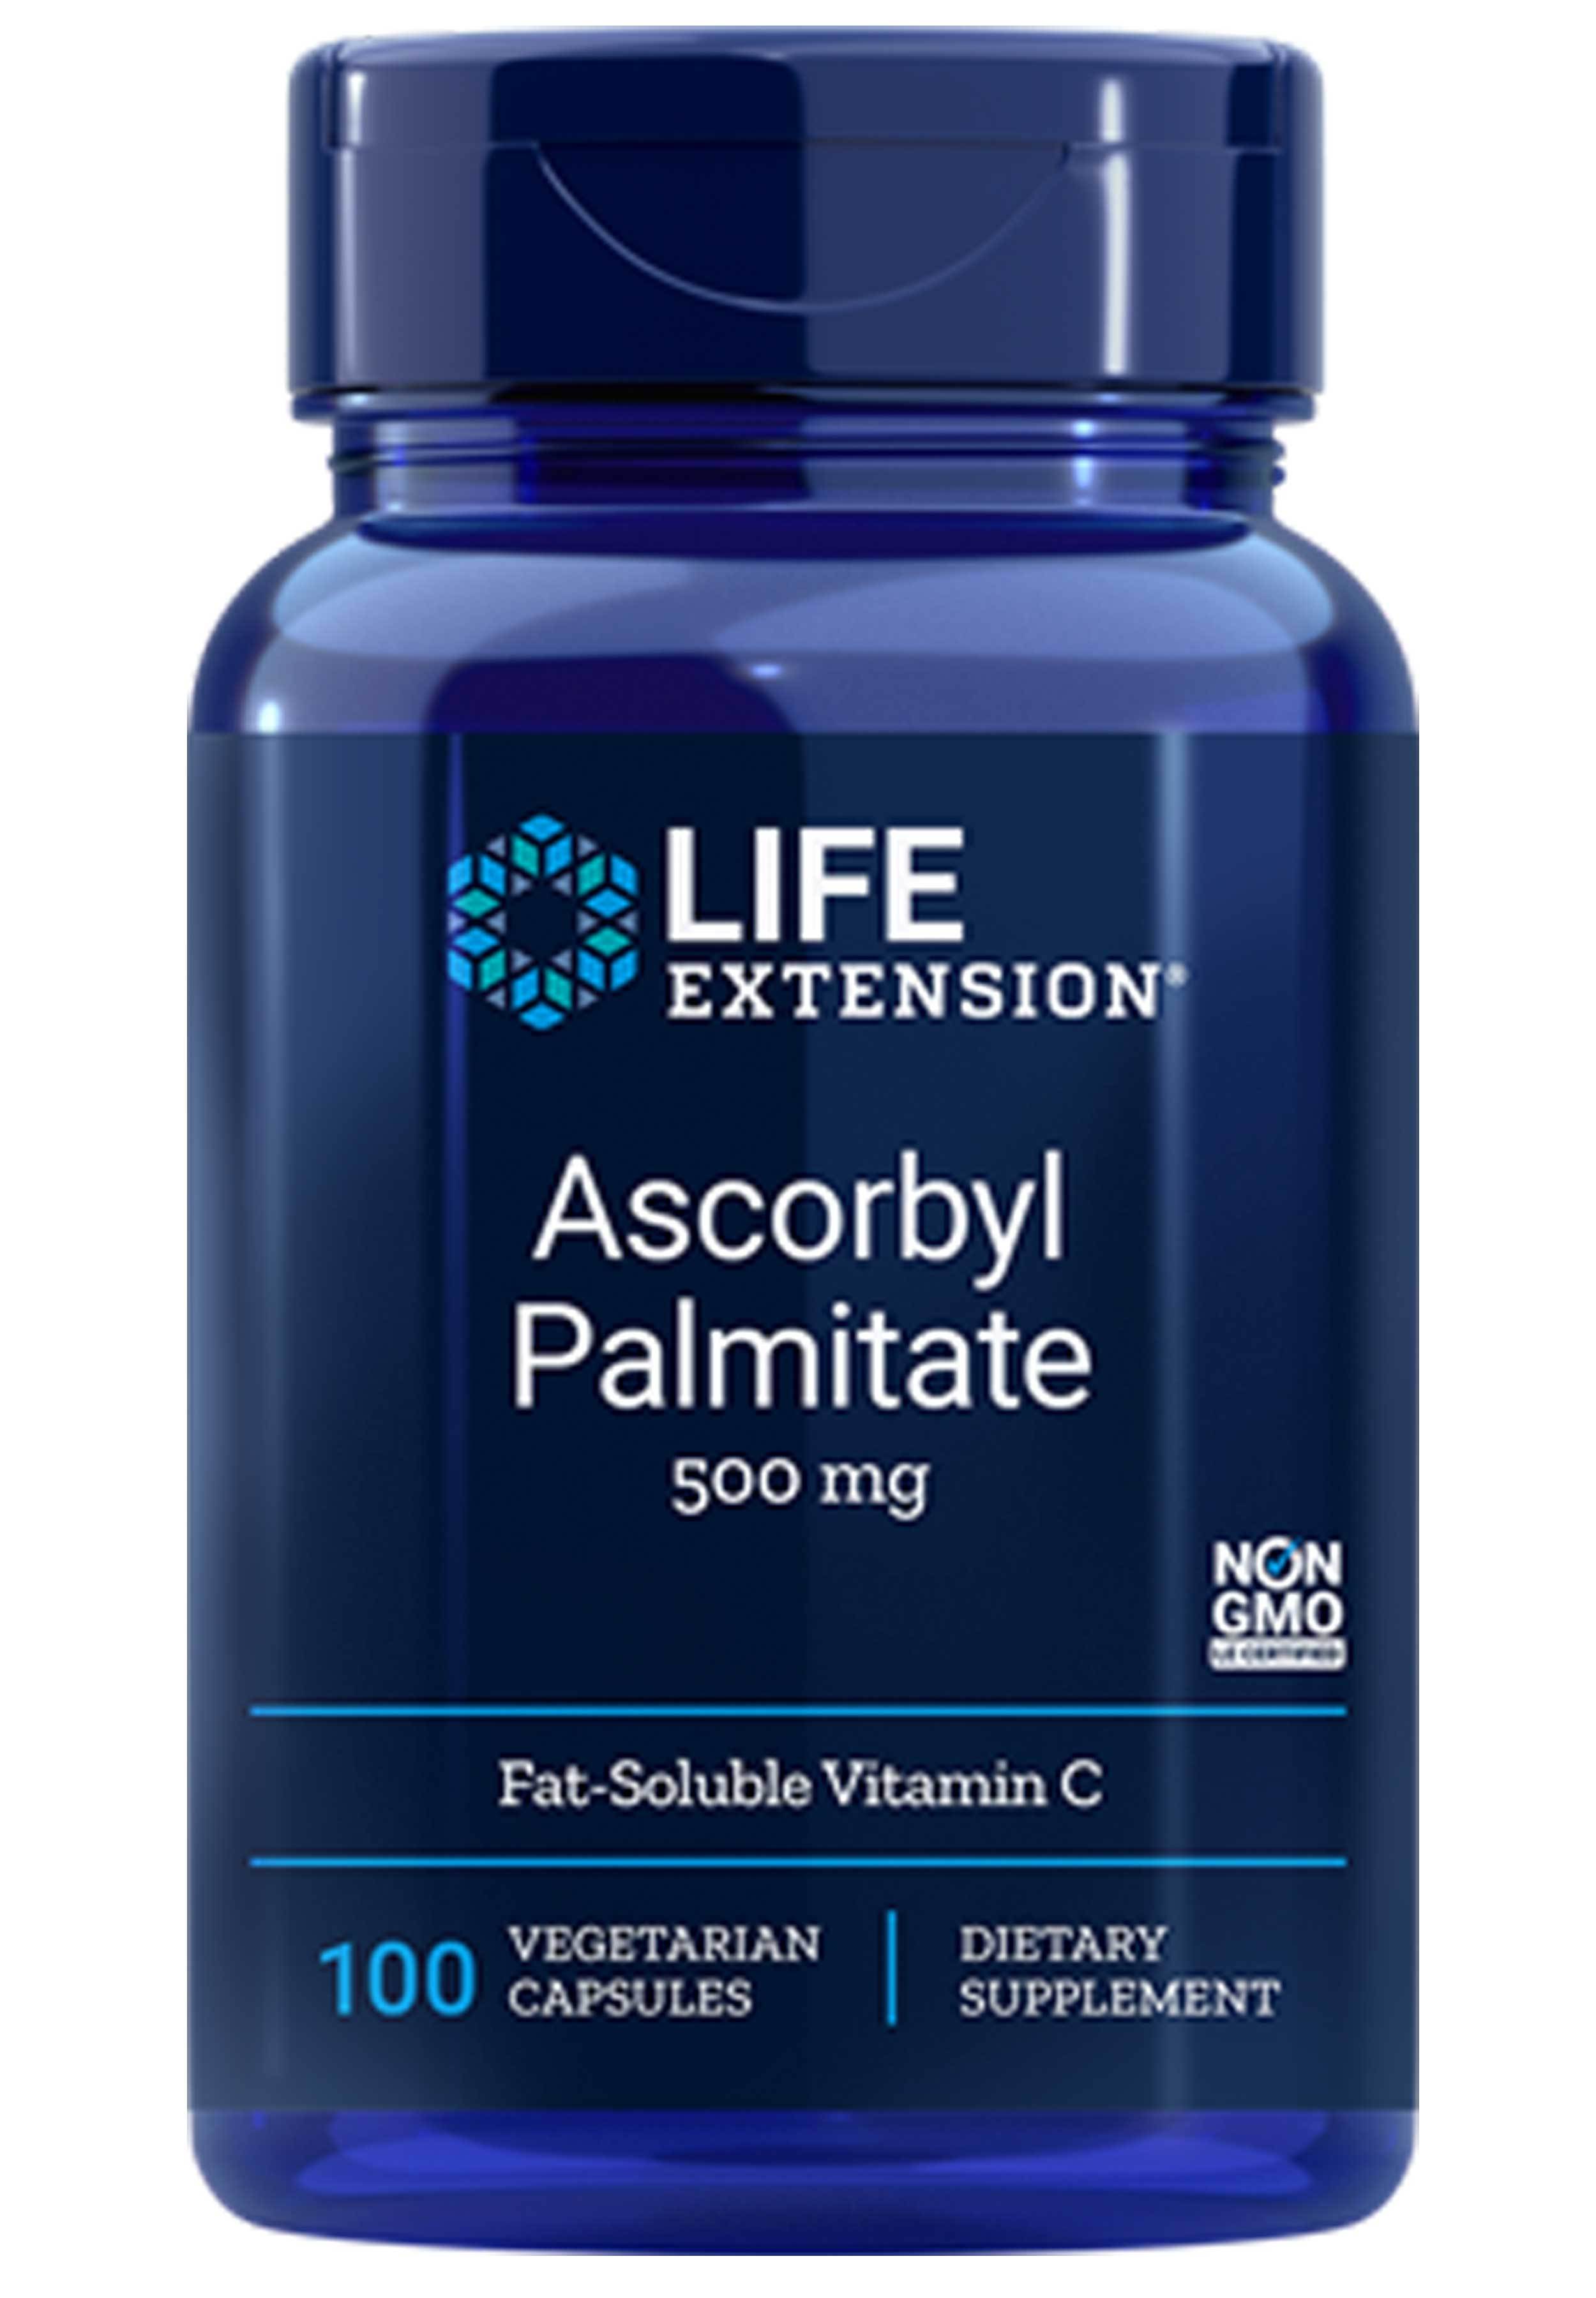 Life Extension Ascorbyl Palmitate